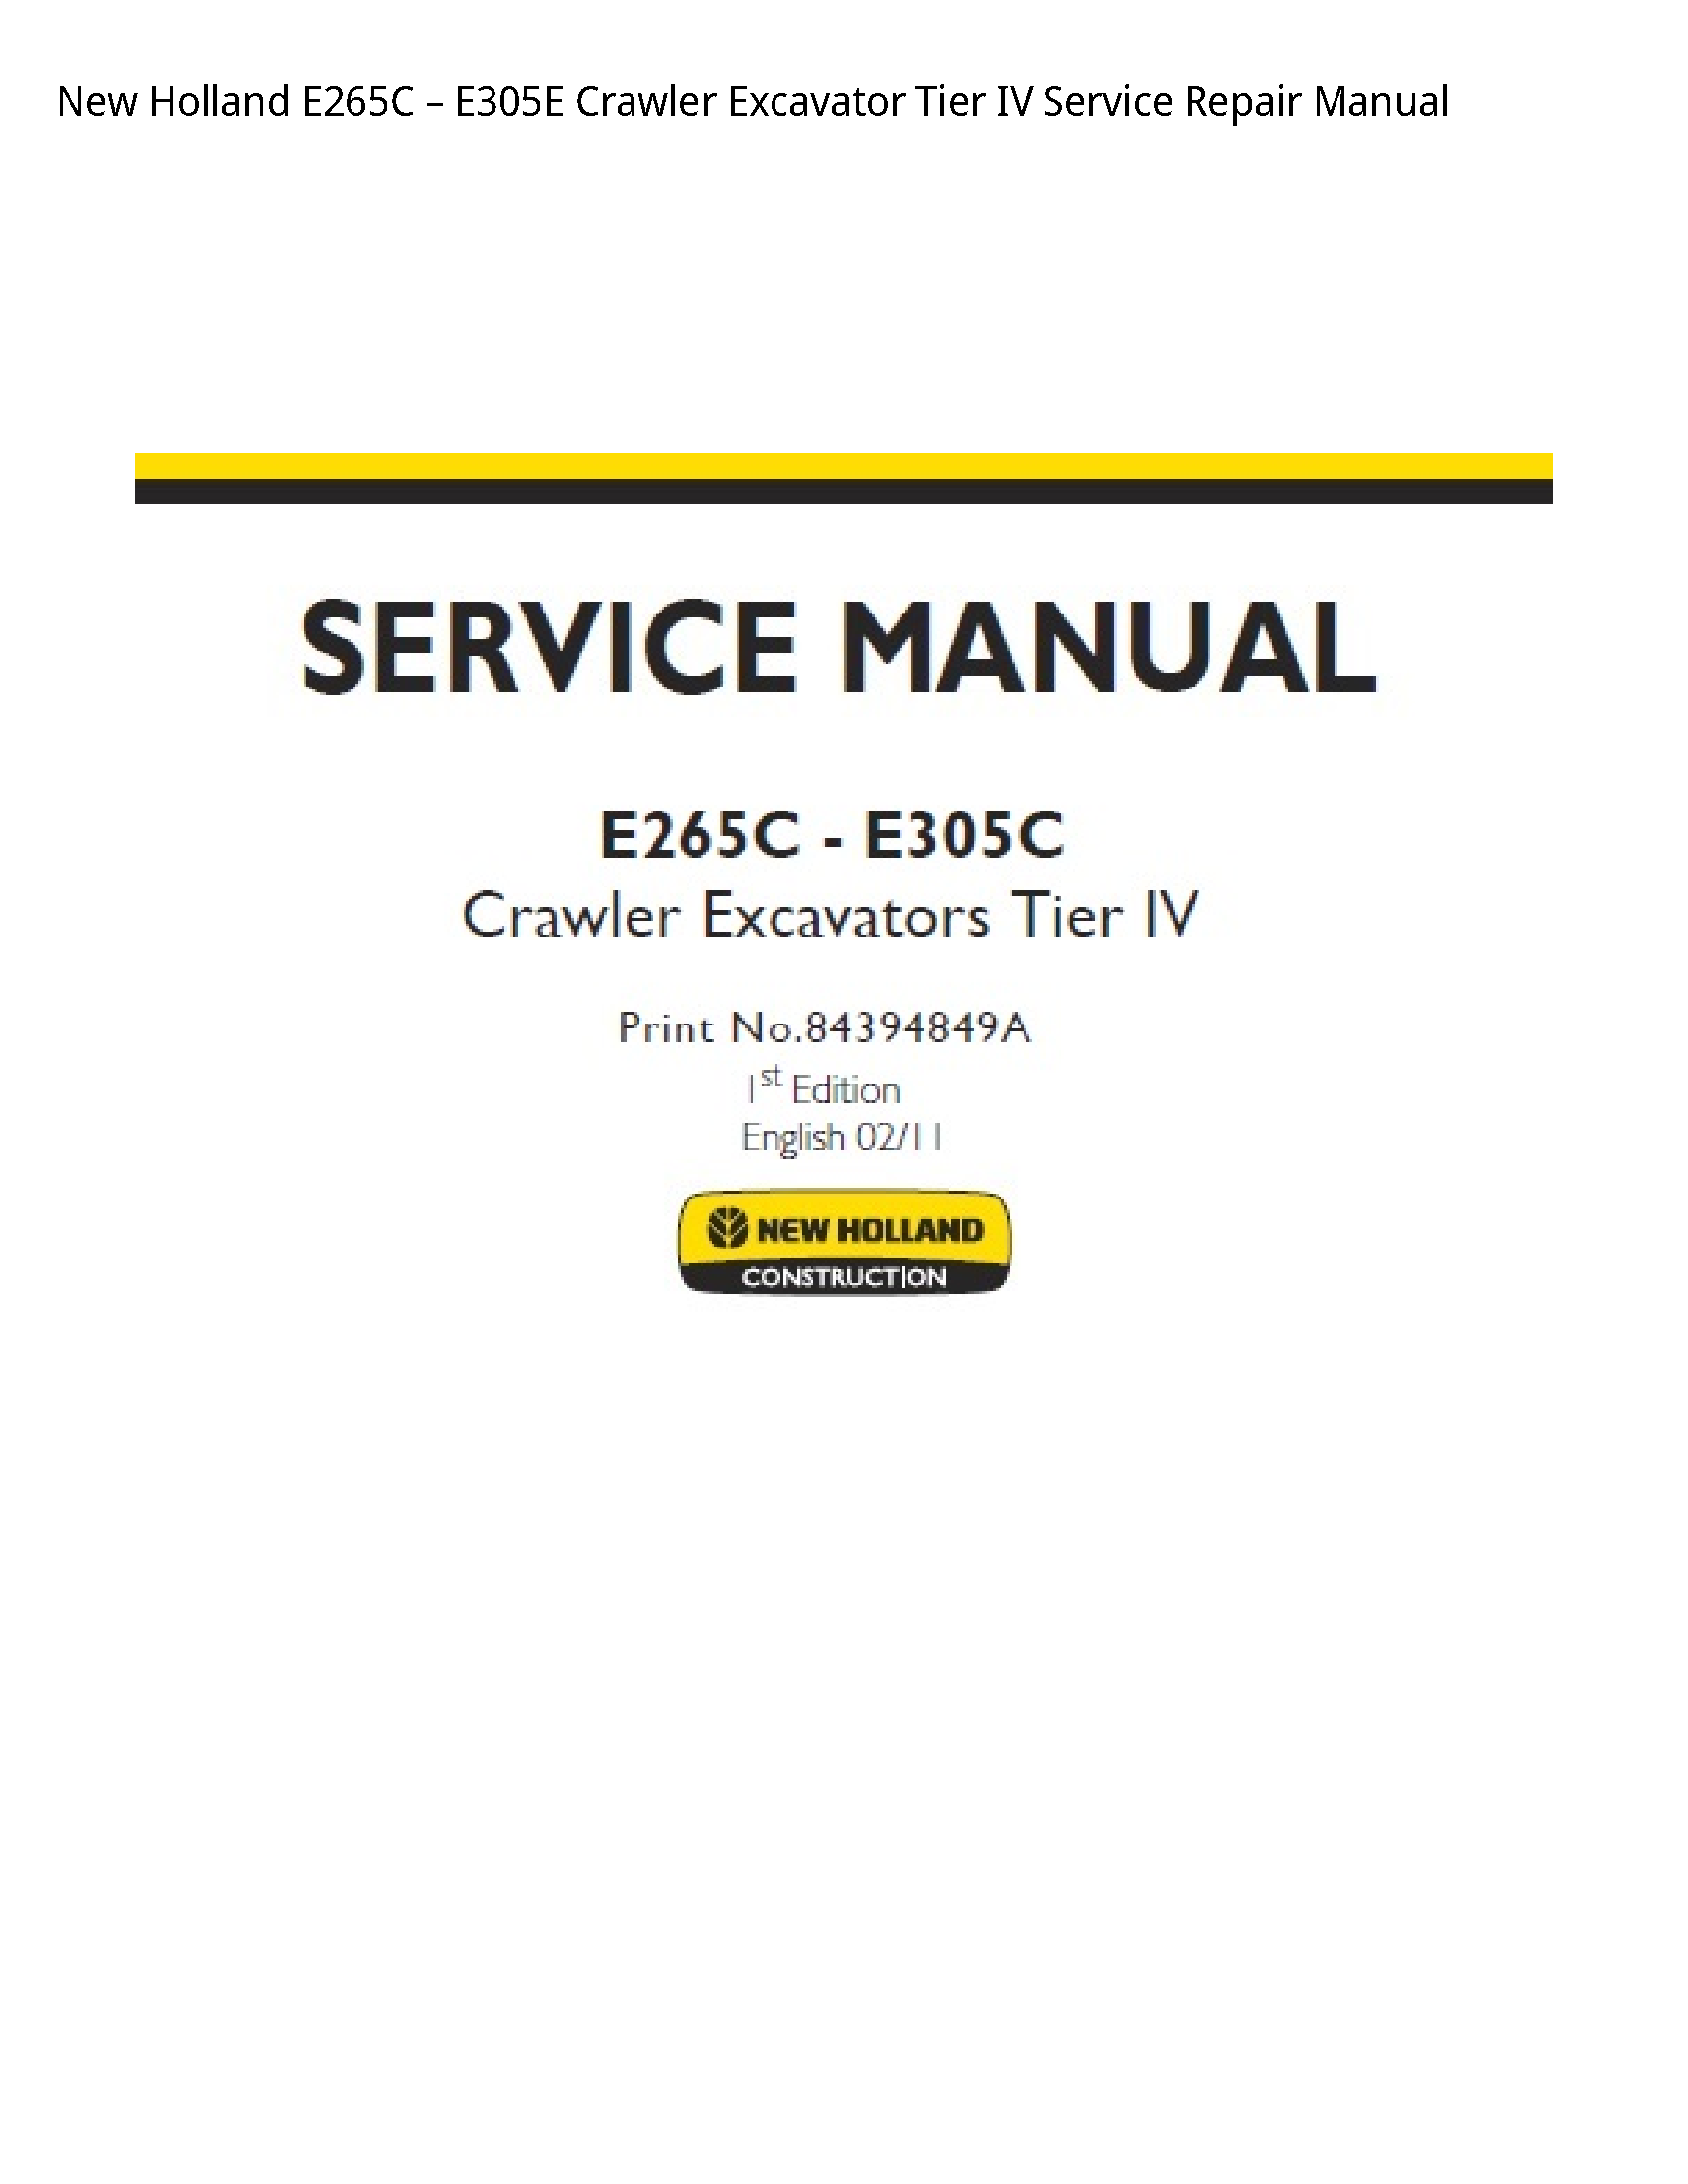 New Holland E265C Crawler Excavator Tier IV manual